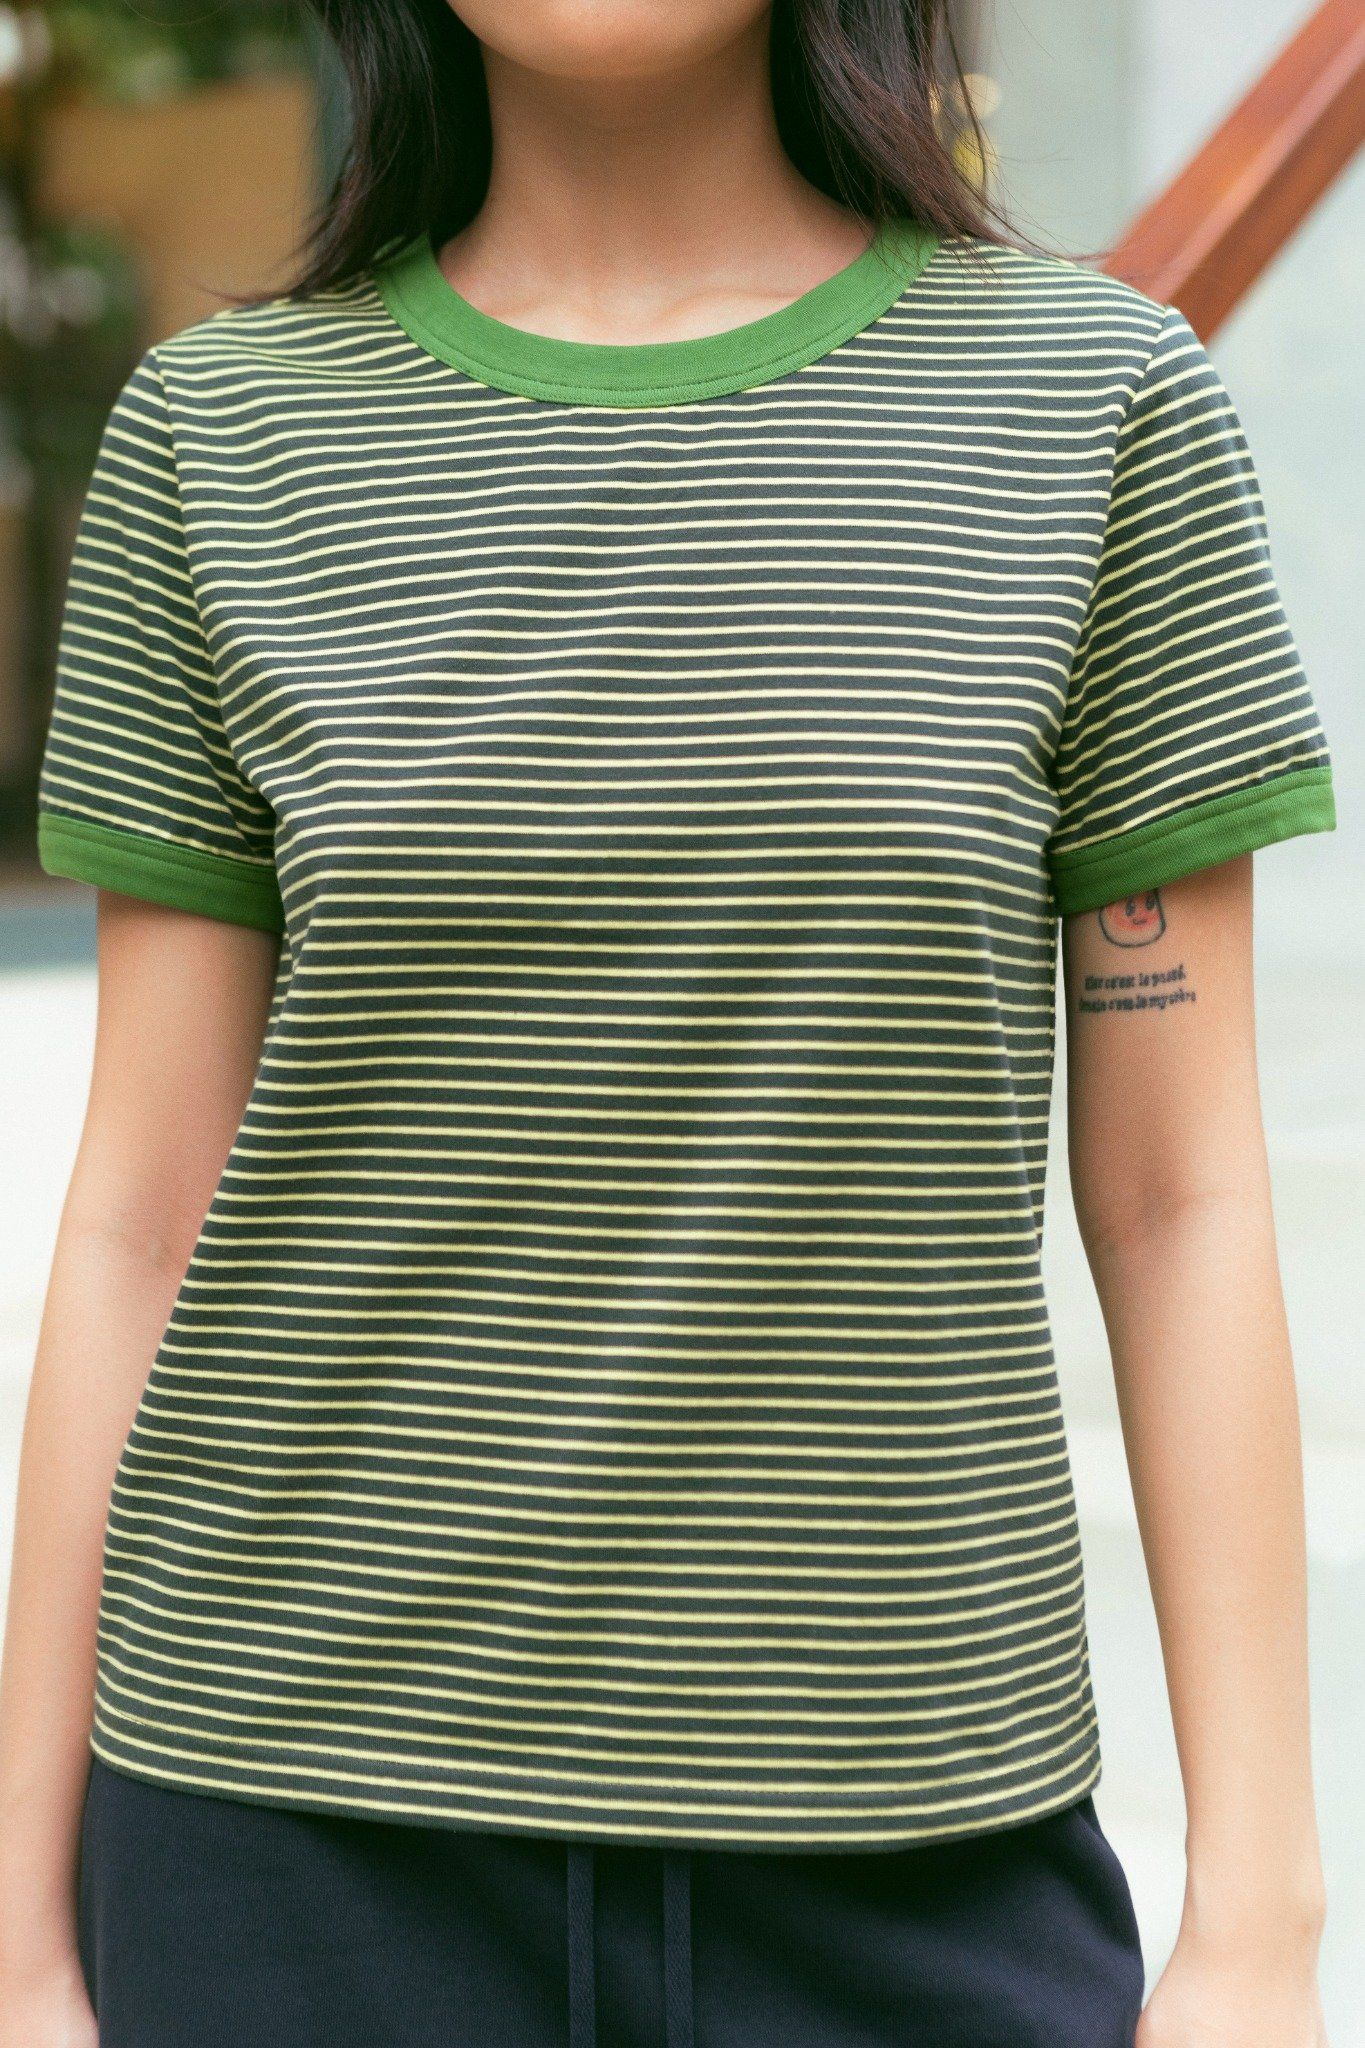  Green Striped Short Sleeve Baby Tee 